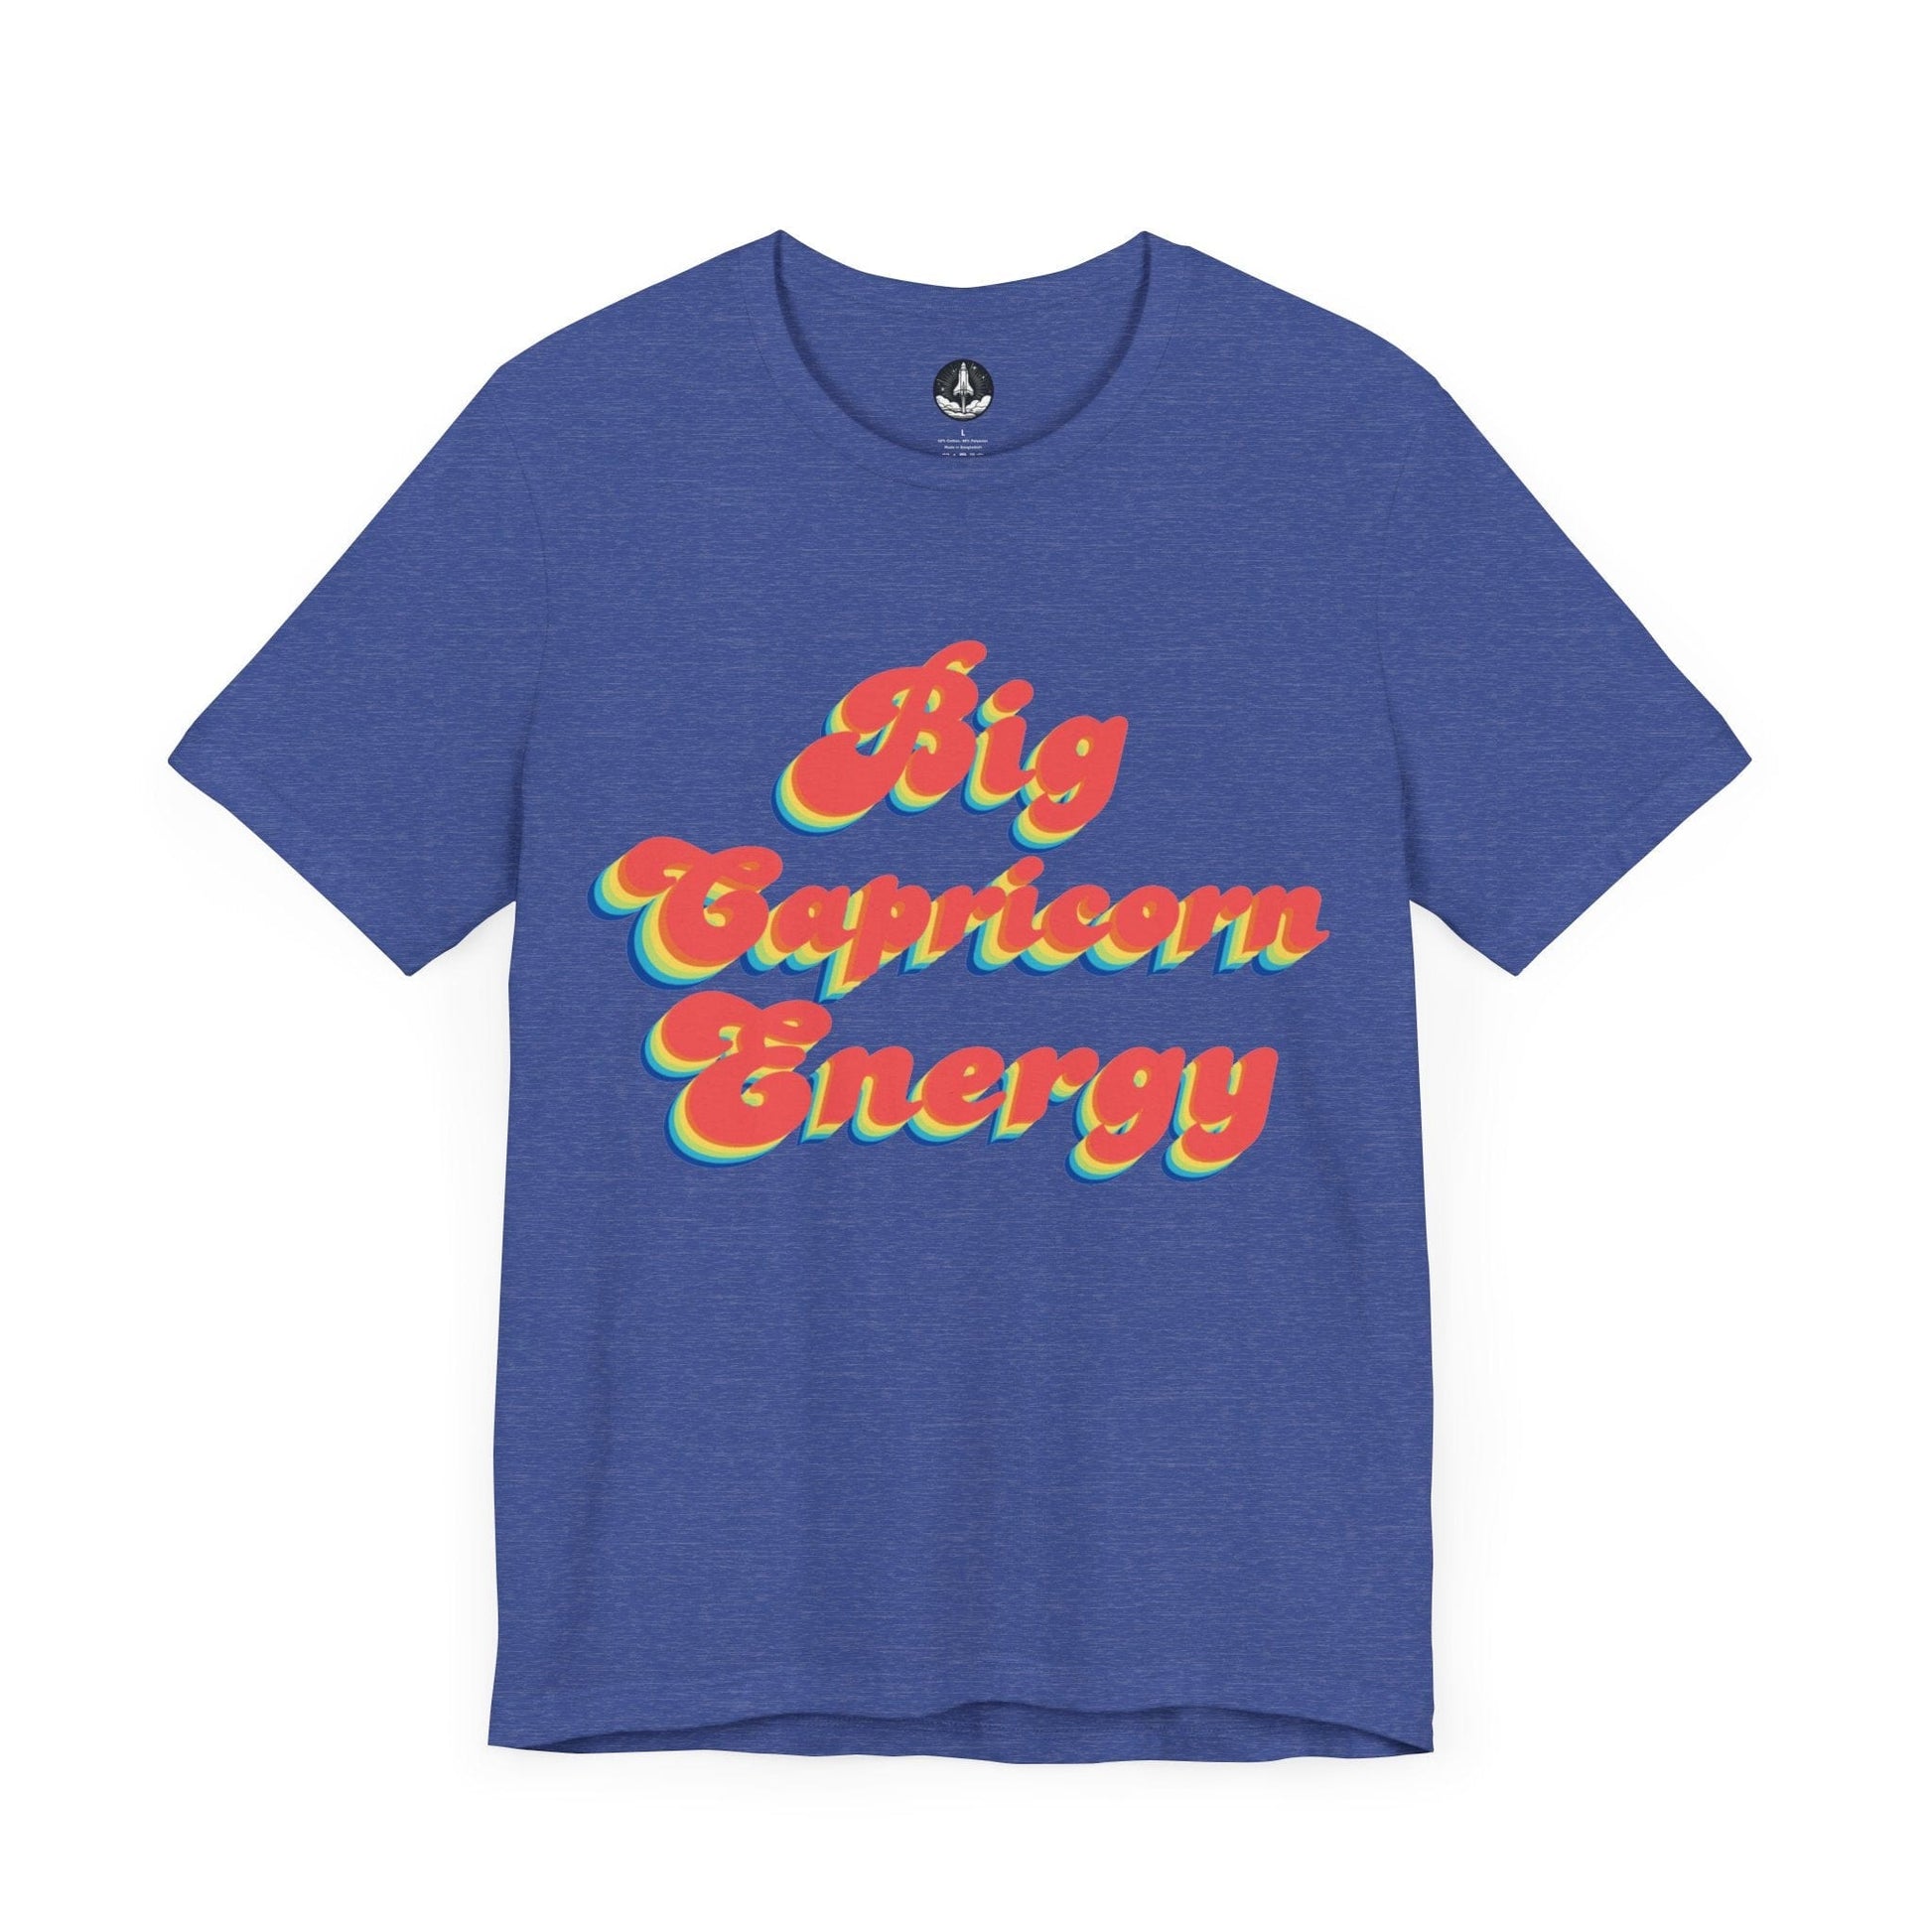 T-Shirt Heather True Royal / S Big Capricorn Energy T-Shirt